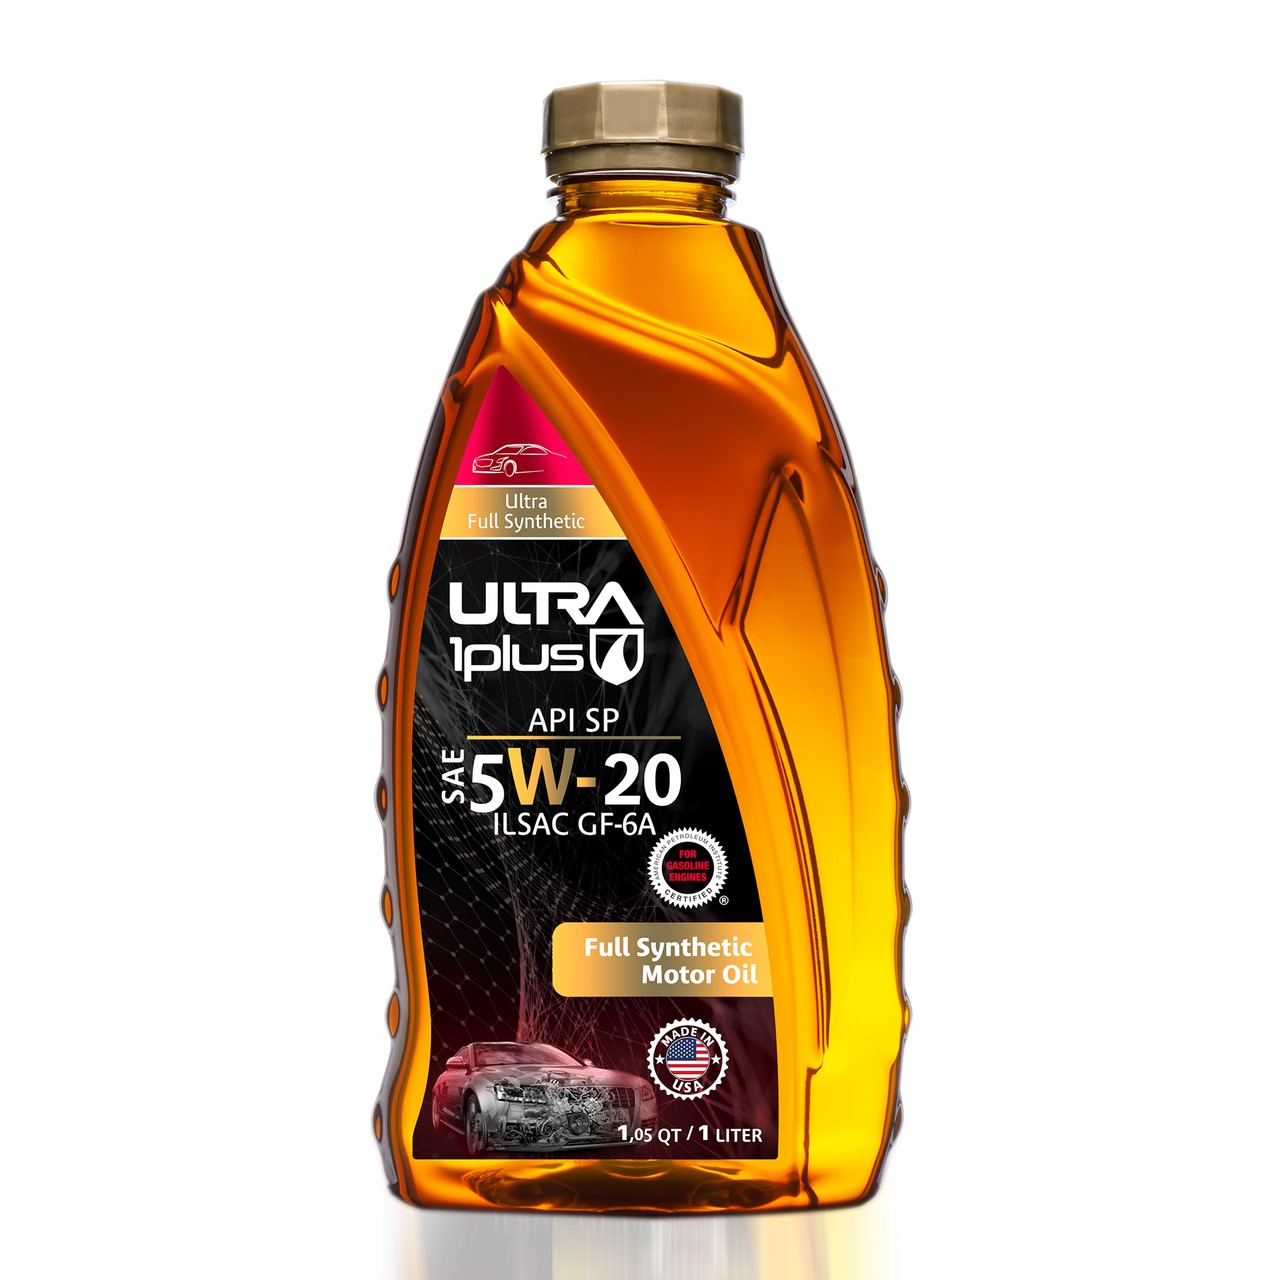 Ultra1Plus Full Synthetic Motor Oil, API SP, ILSAC GF-6A